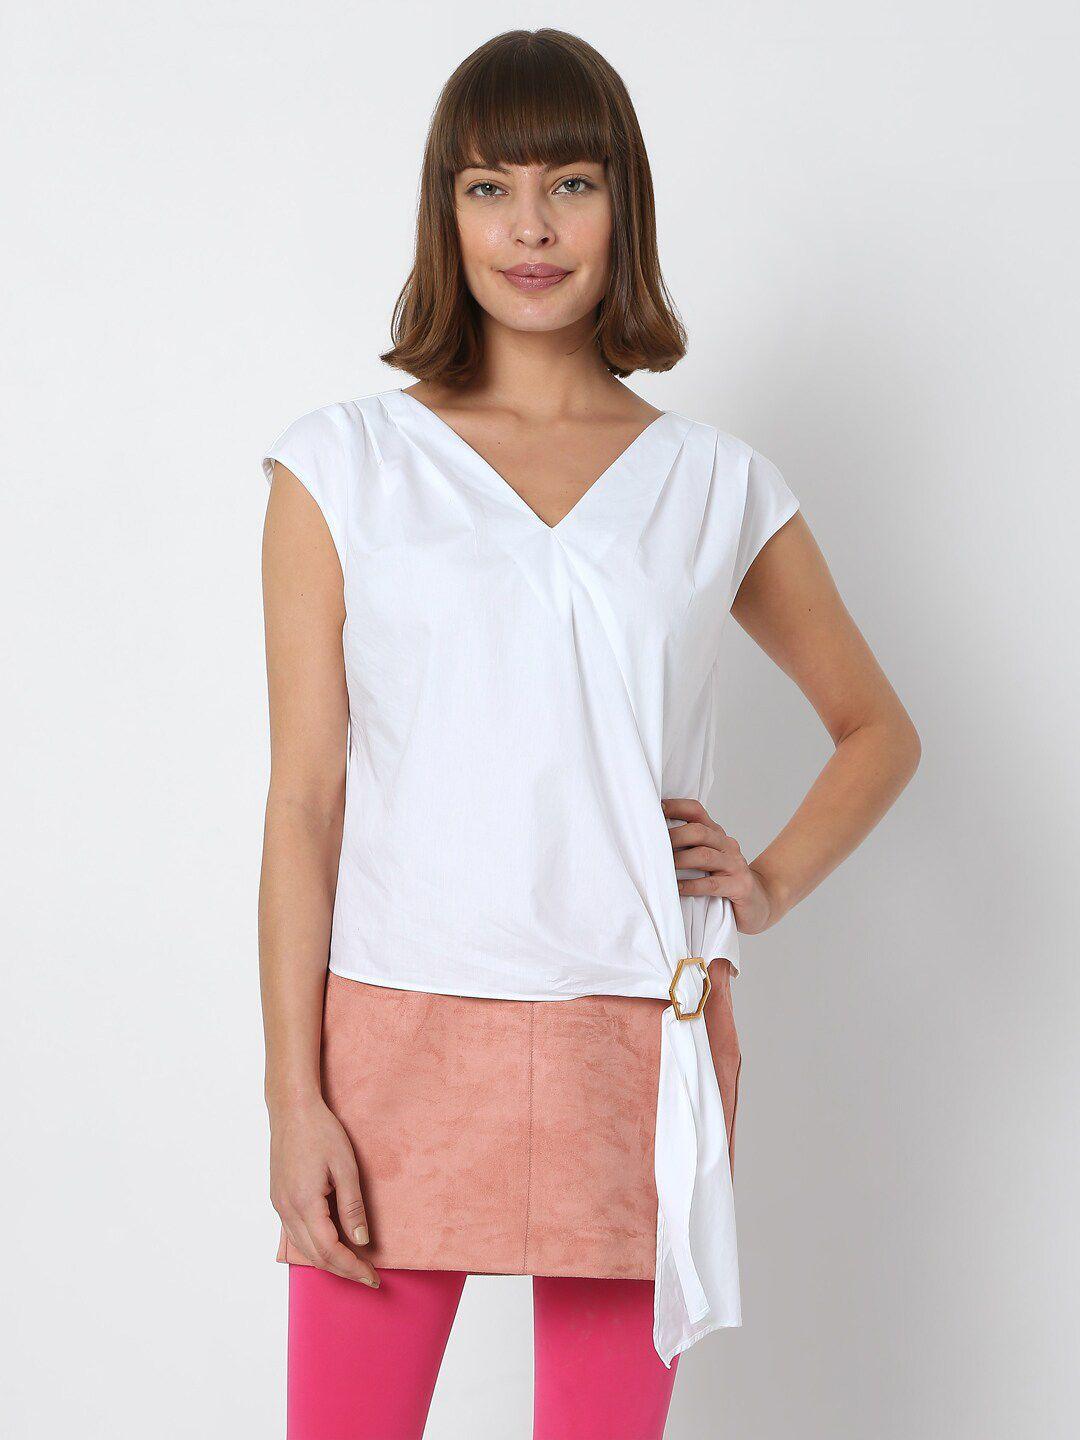 vero moda women white extended sleeves top